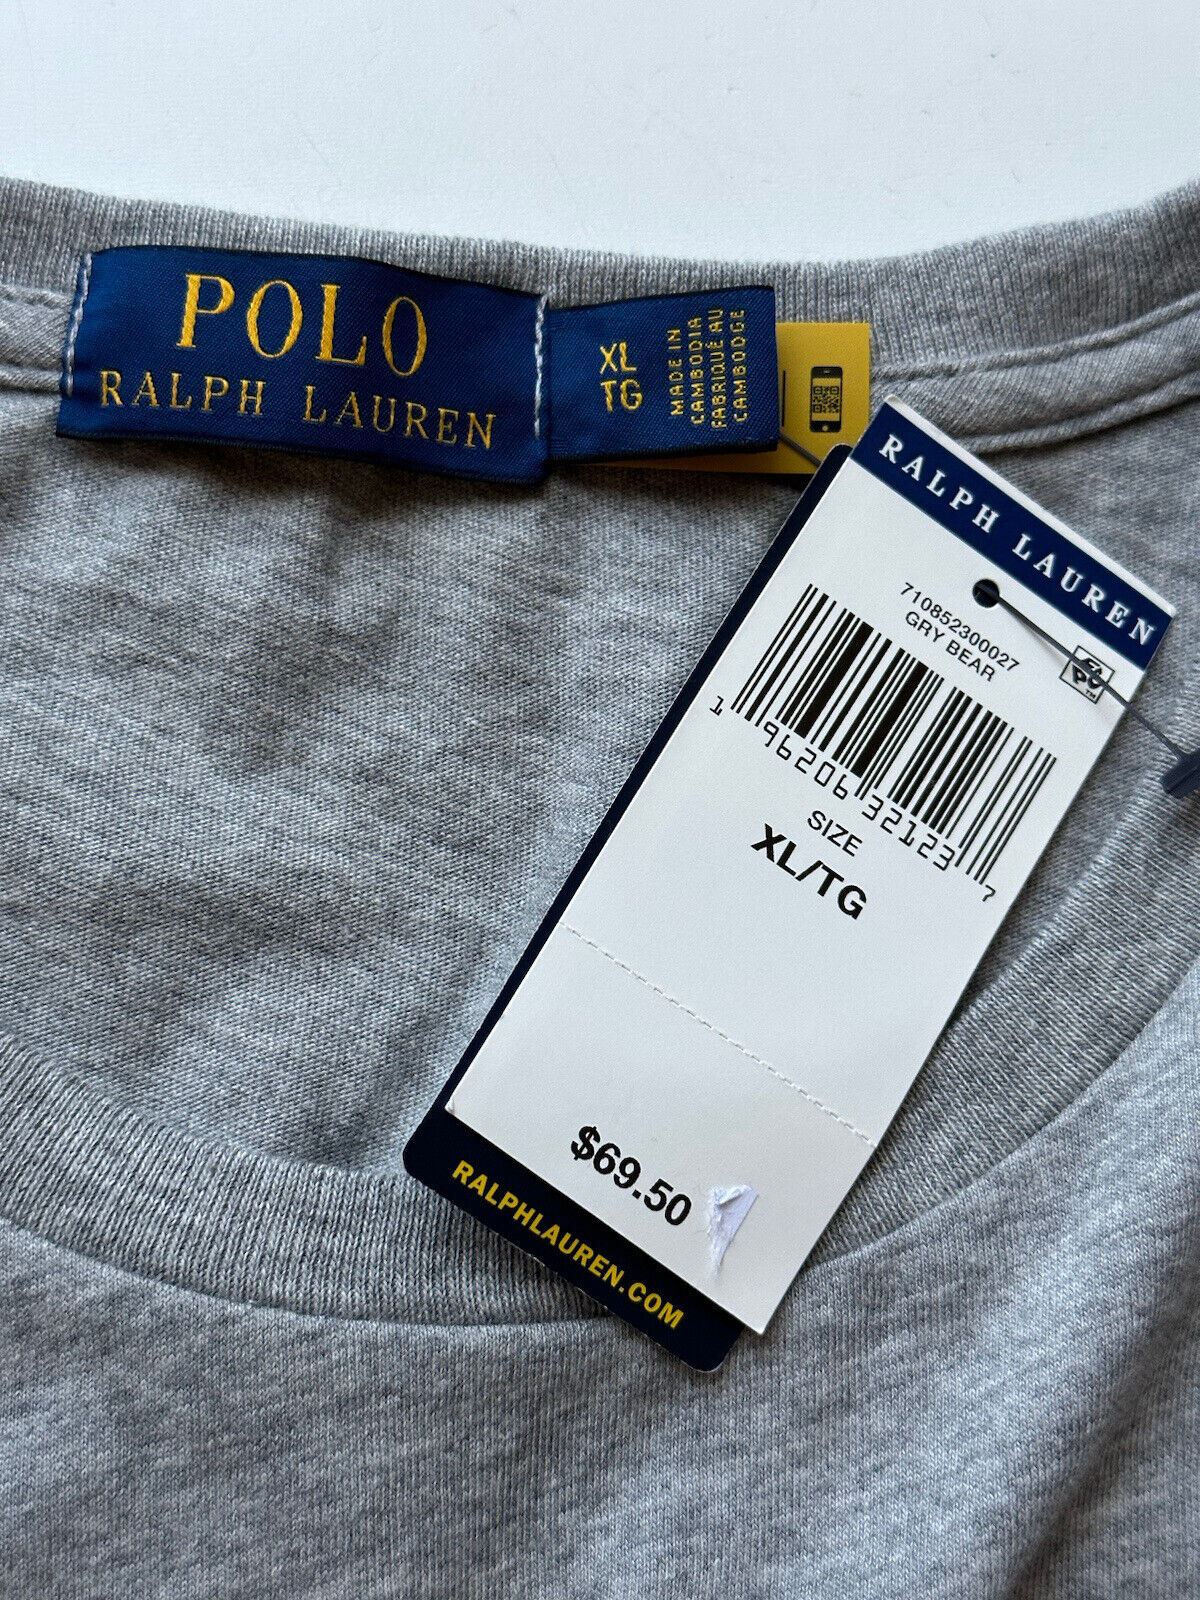 Neu mit Etikett: 69,50 $ Polo Ralph Lauren Kurzarm-T-Shirt mit Bärenmuster, Grau, XL